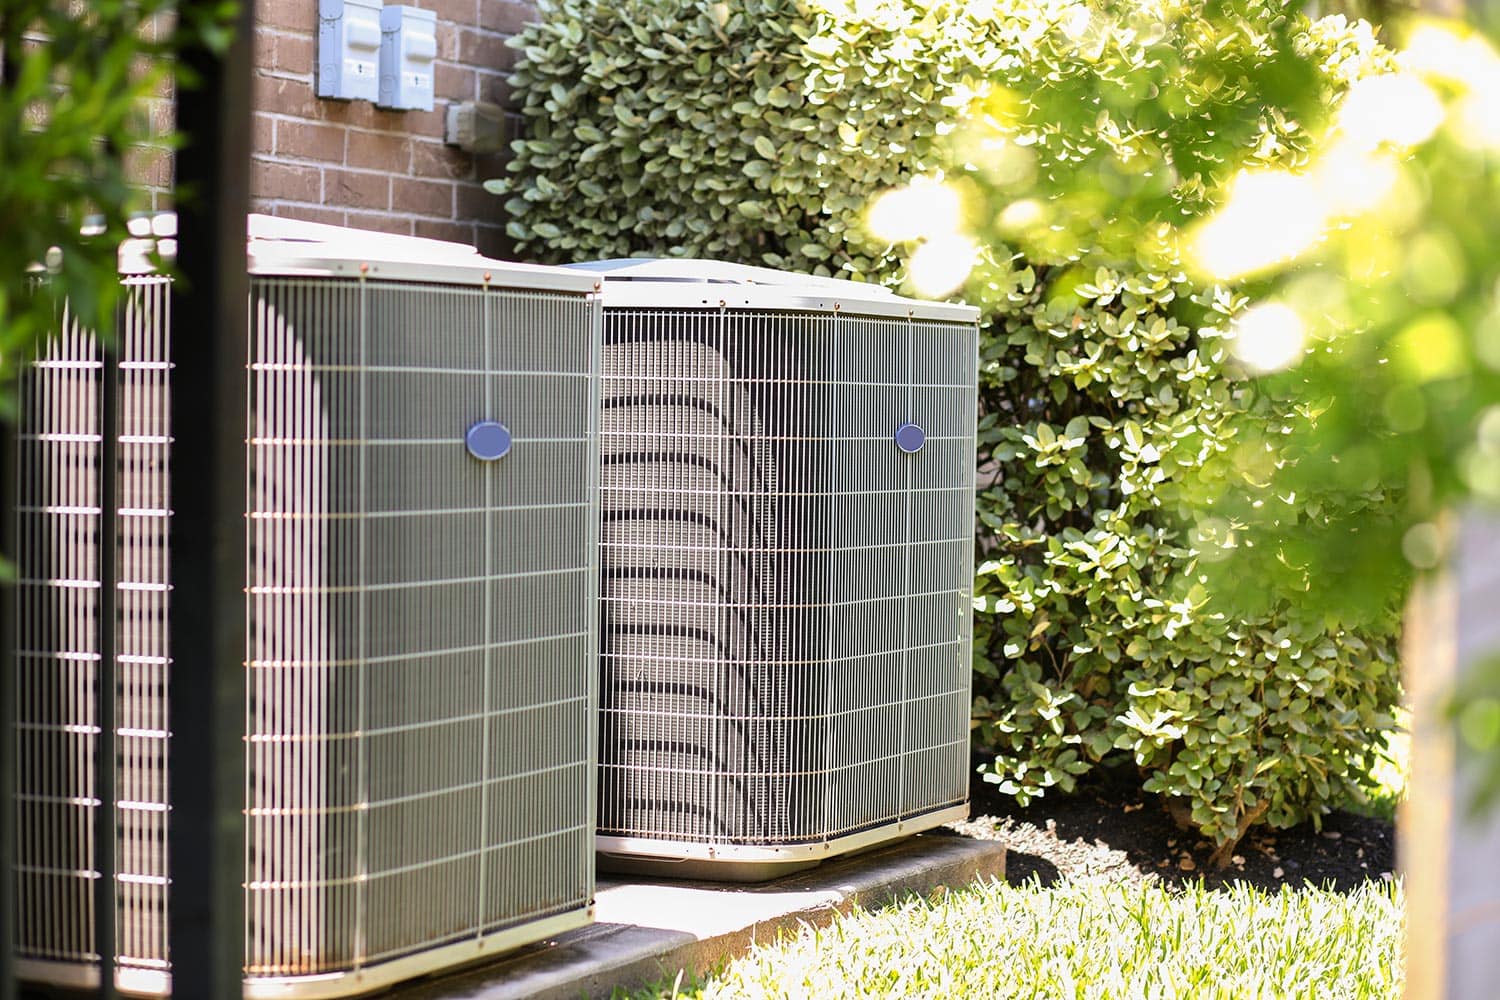 Home air conditioner unit in summer season